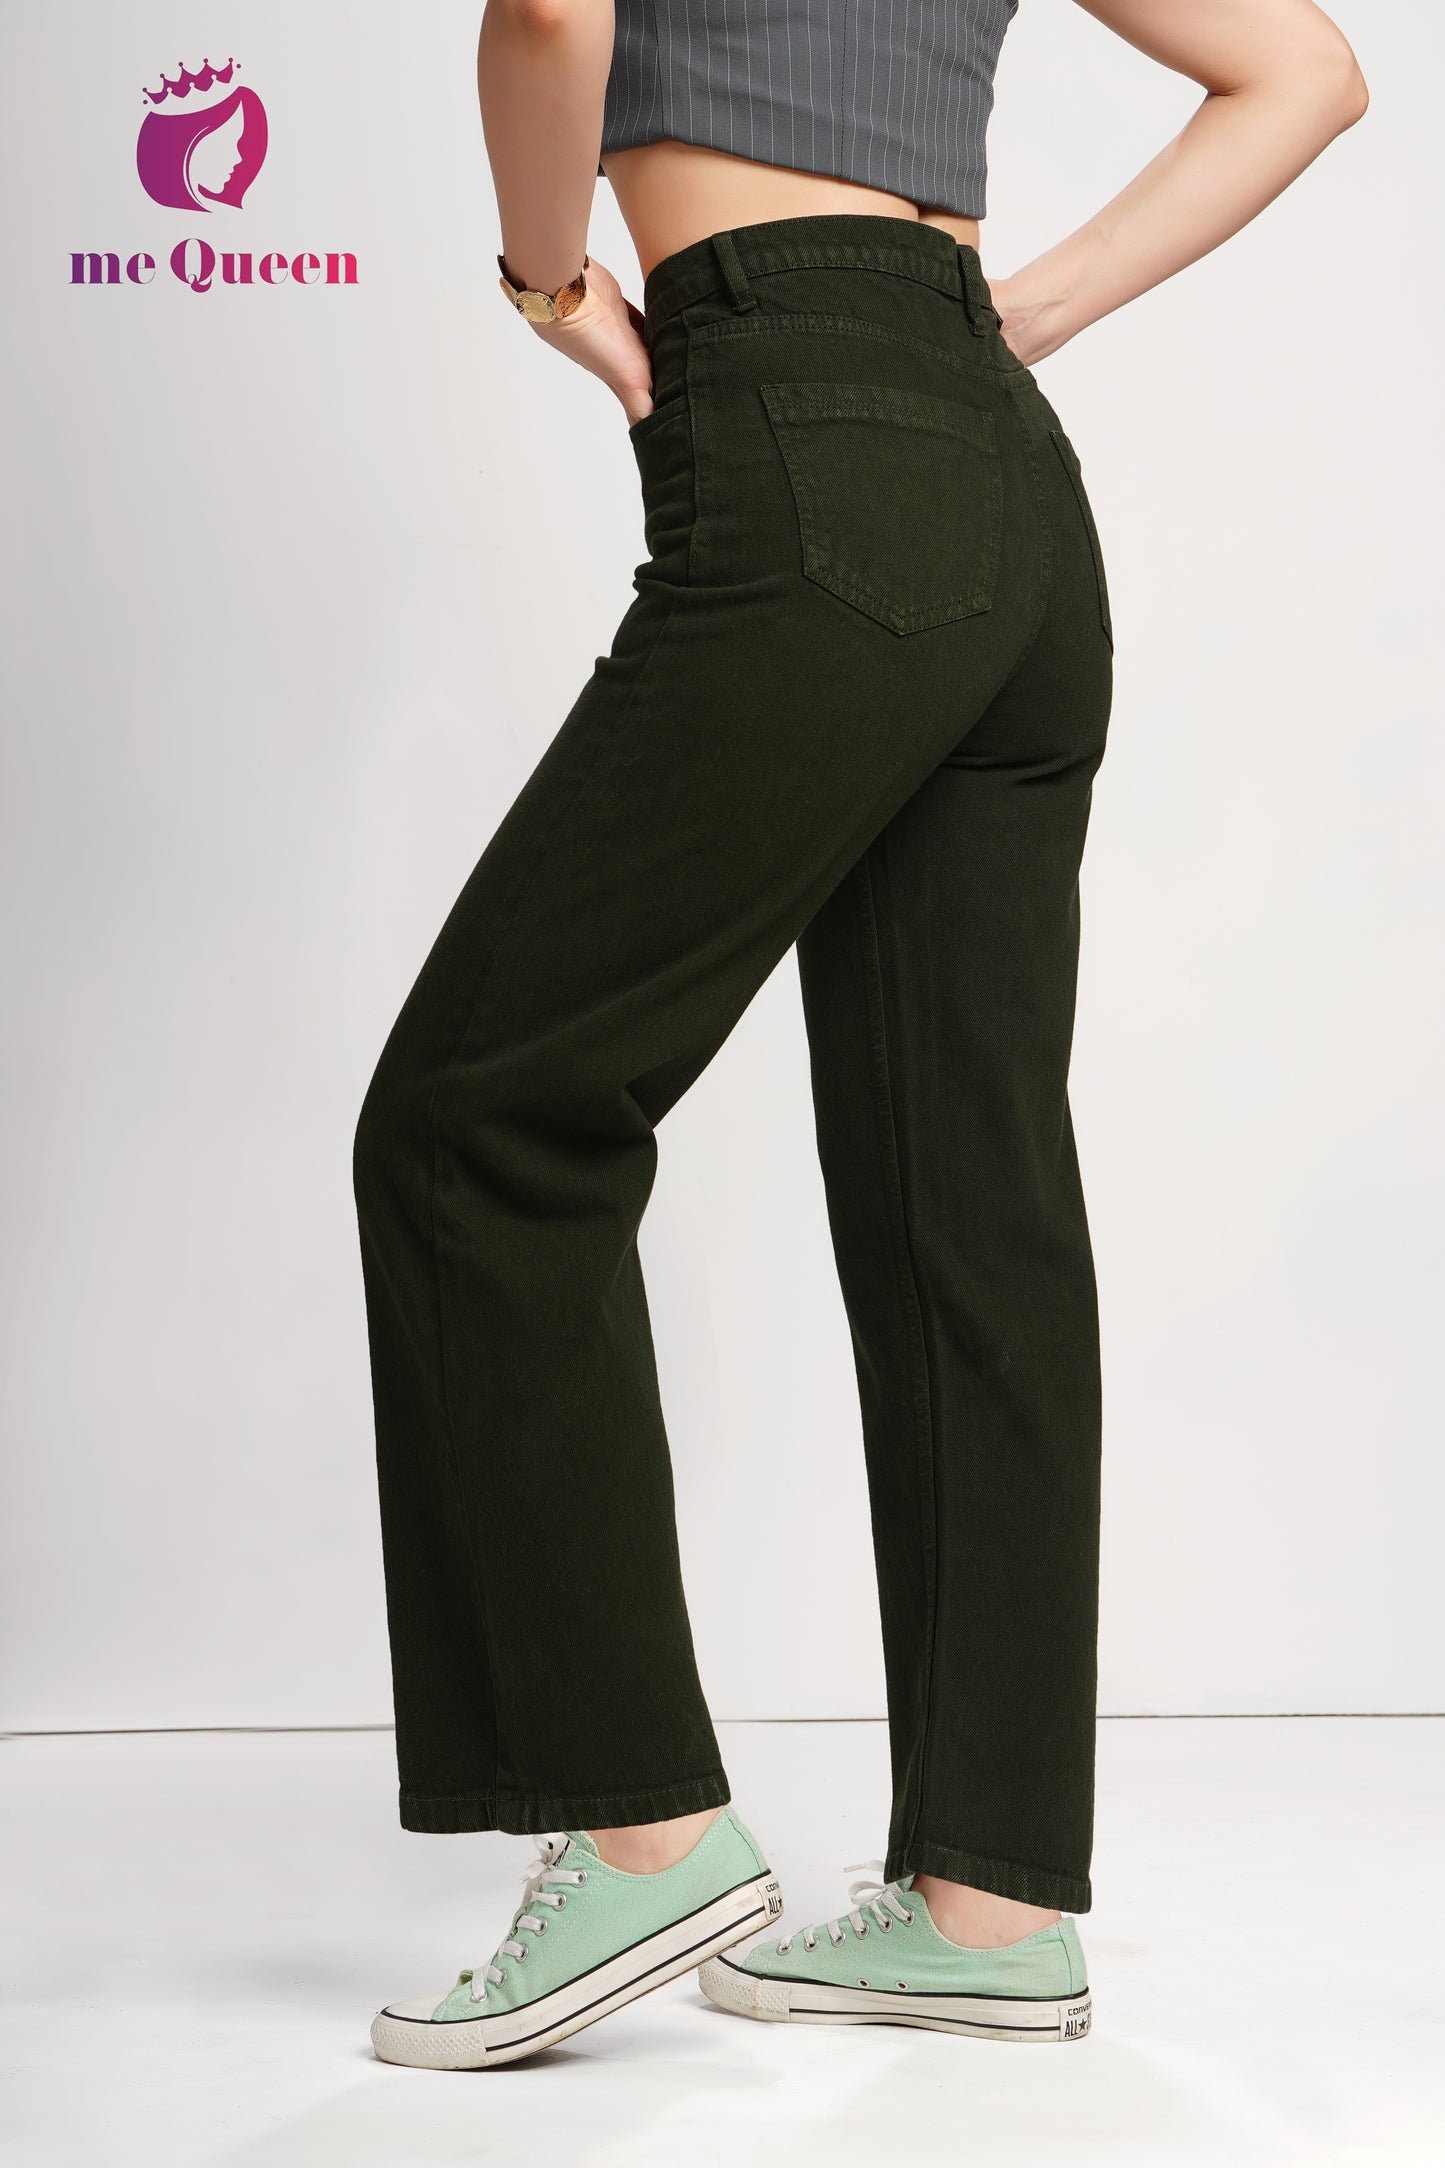 MeQueen Women's Dark Olive Loose Fit Denim Jeans